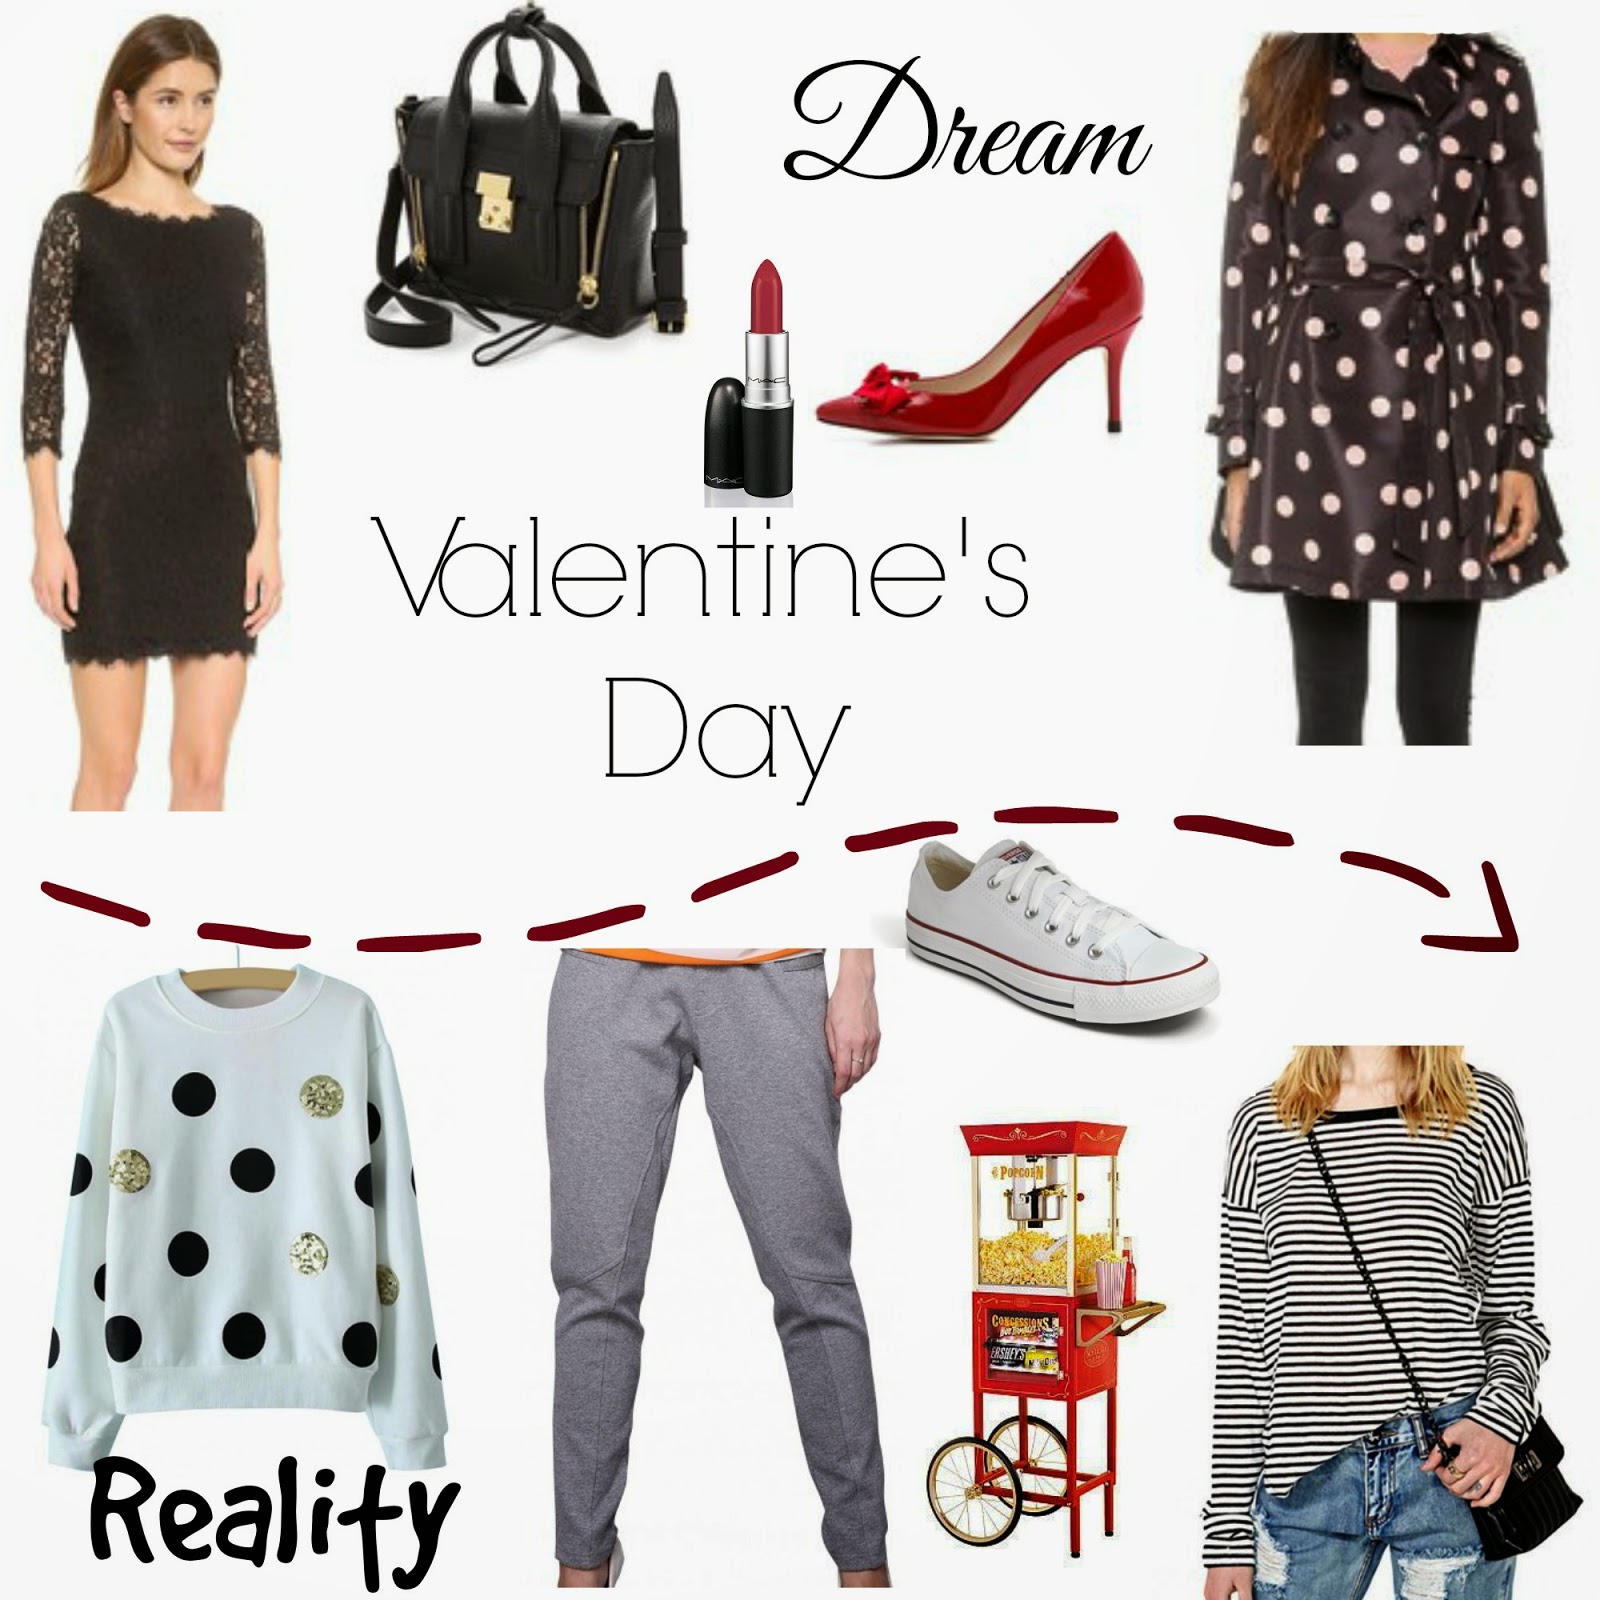 Valentine's Day Dream vs. Reality